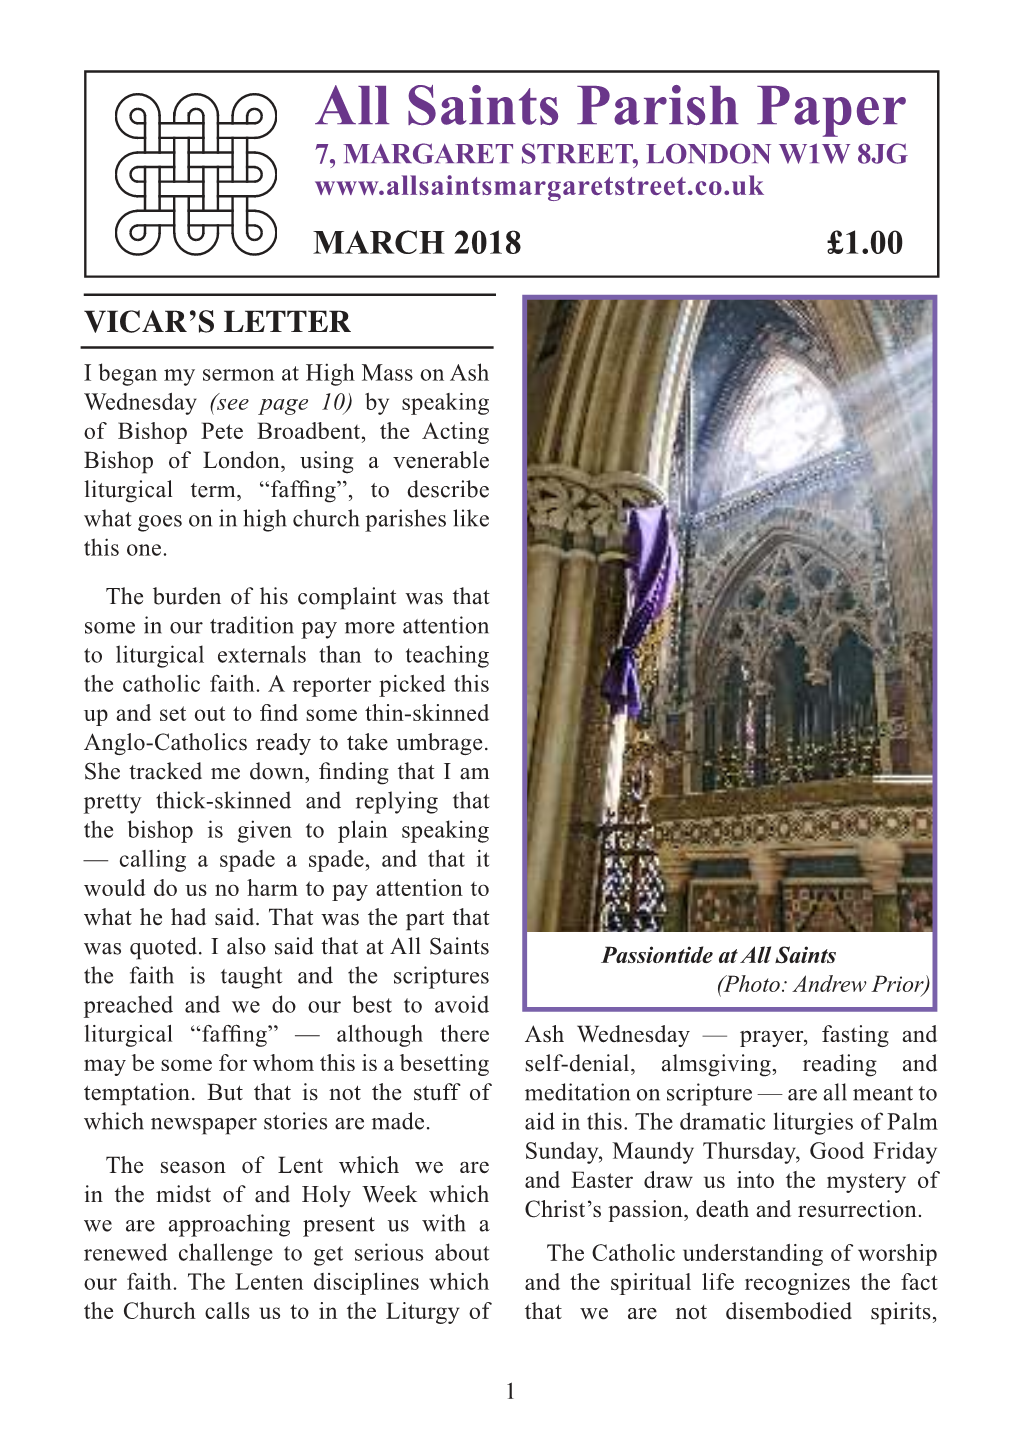 All Saints Parish Paper 7, MARGARET STREET, LONDON W1W 8JG MARCH 2018 £1.00